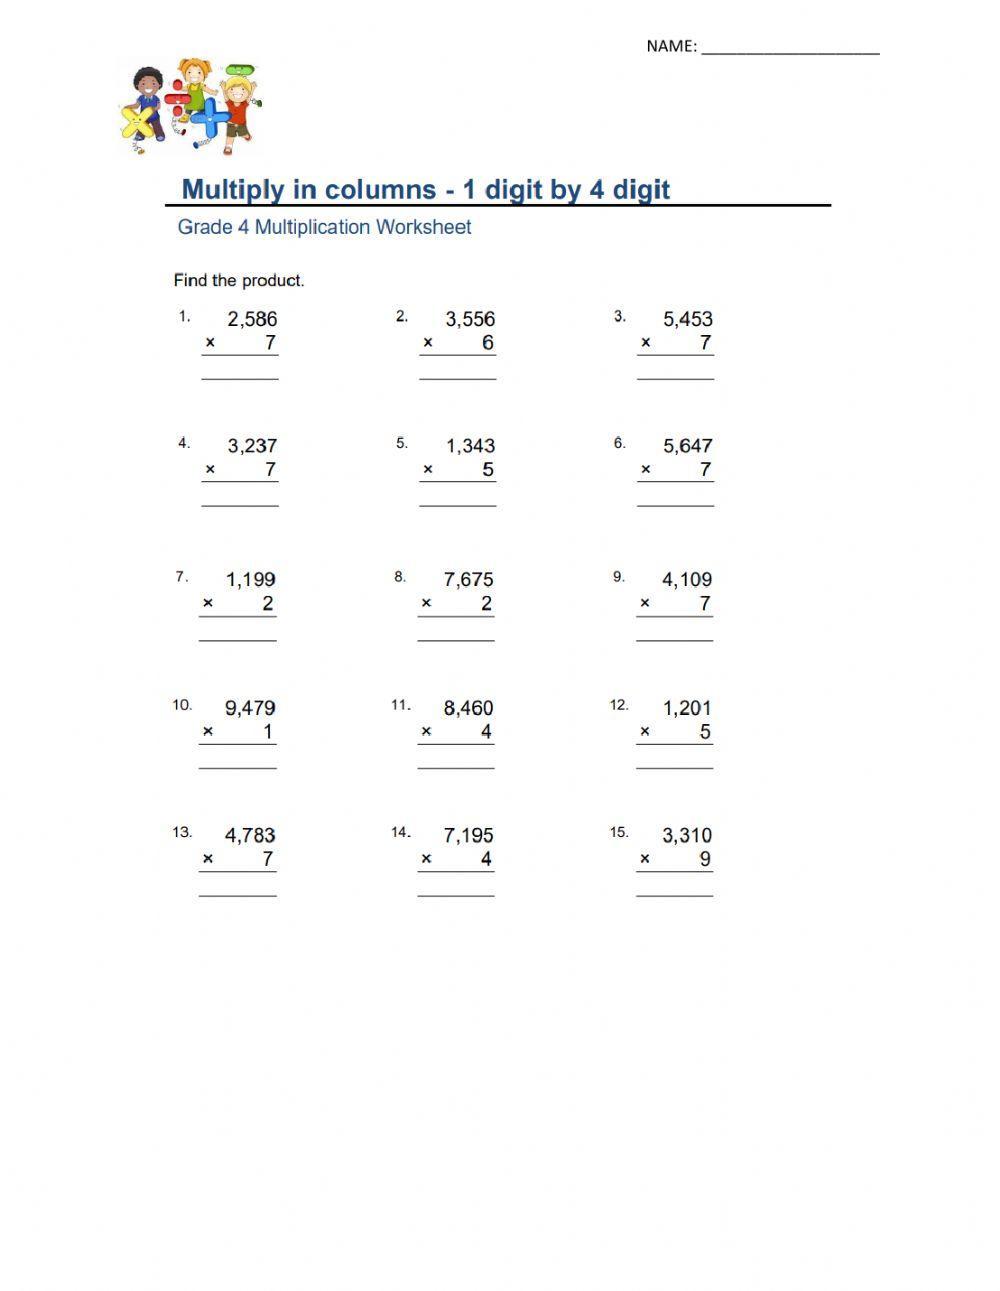 Multiply in Column - 1 digit by 4 digit